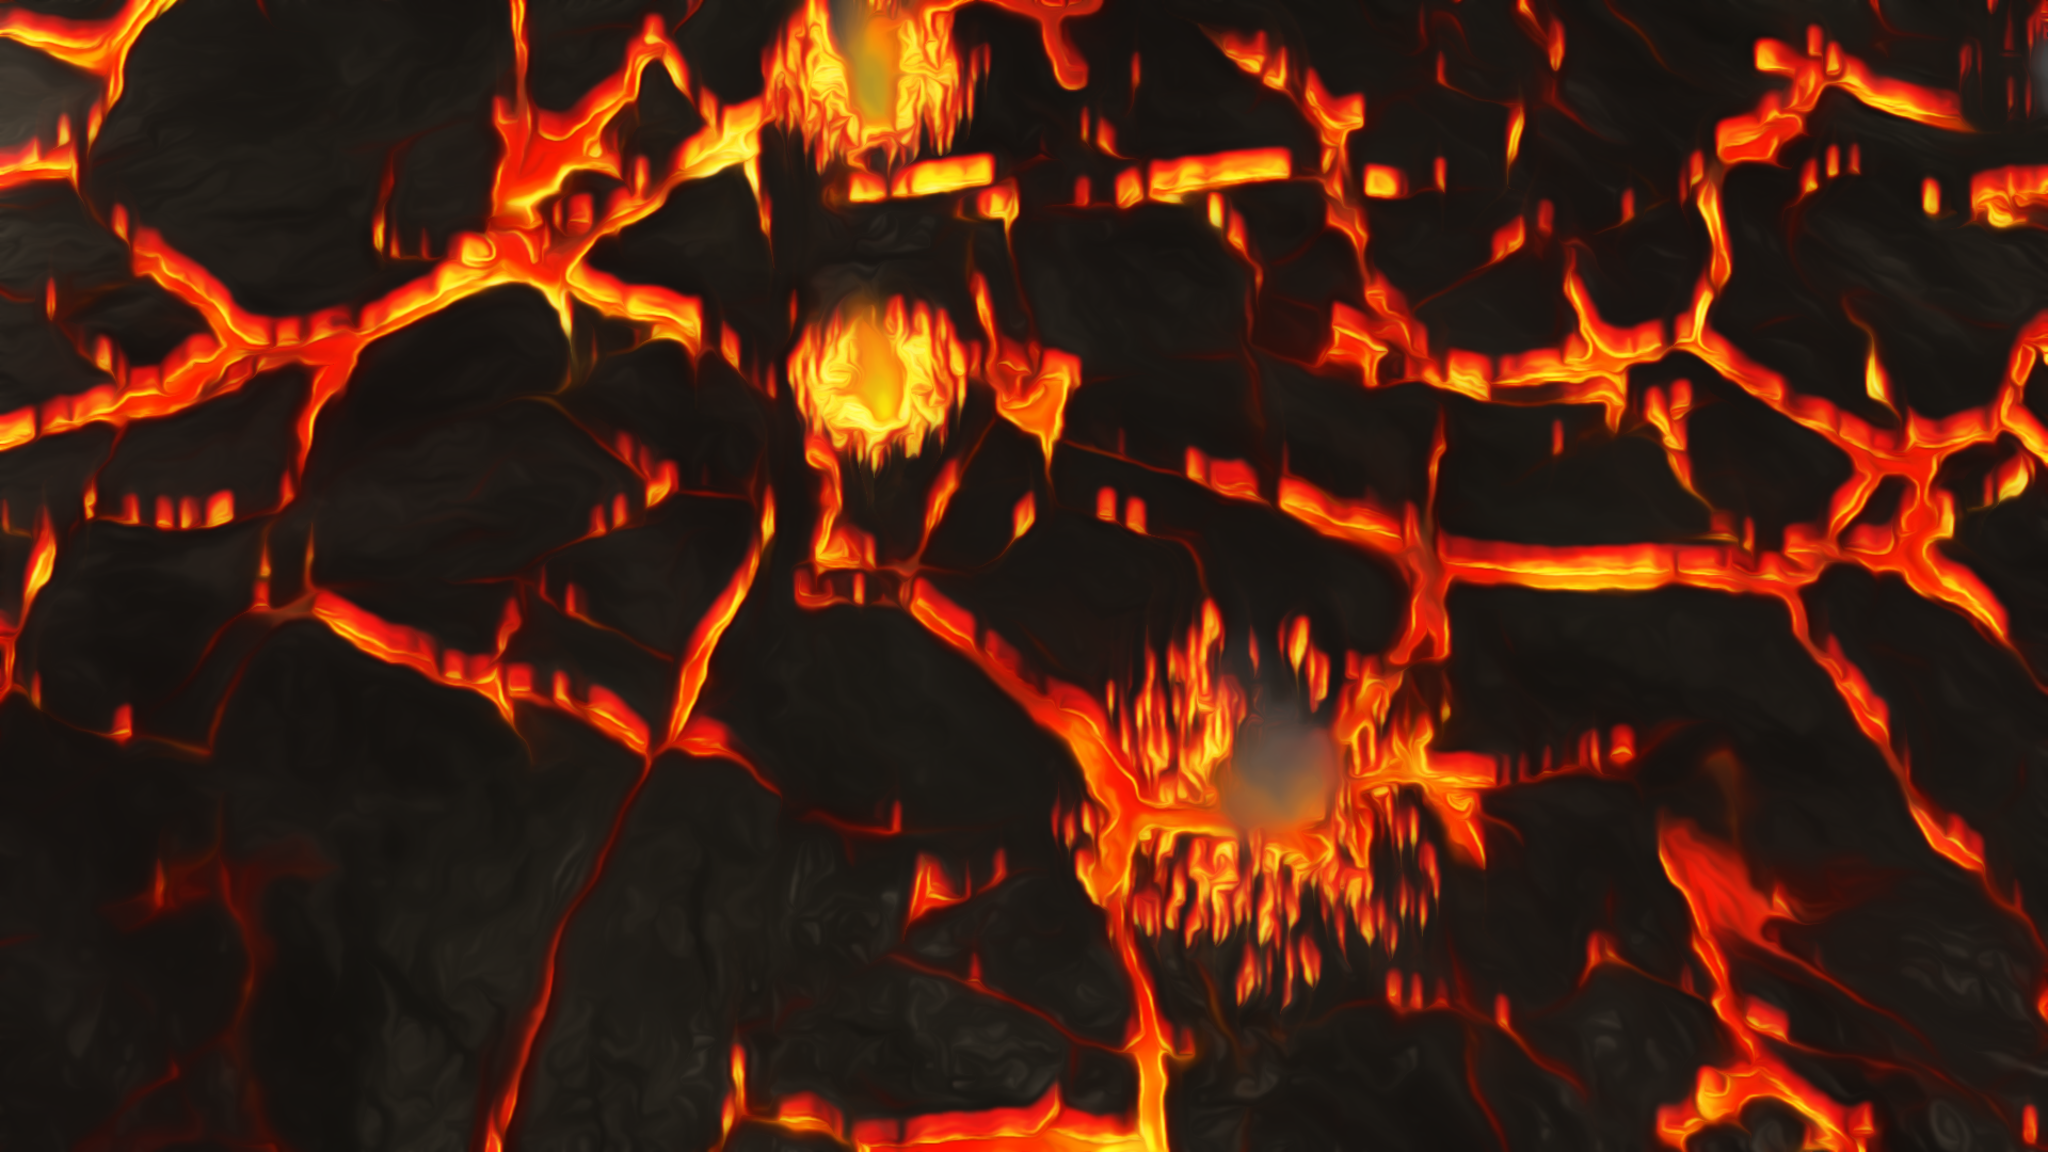 Molten Lava by Metaoxic on DeviantArt